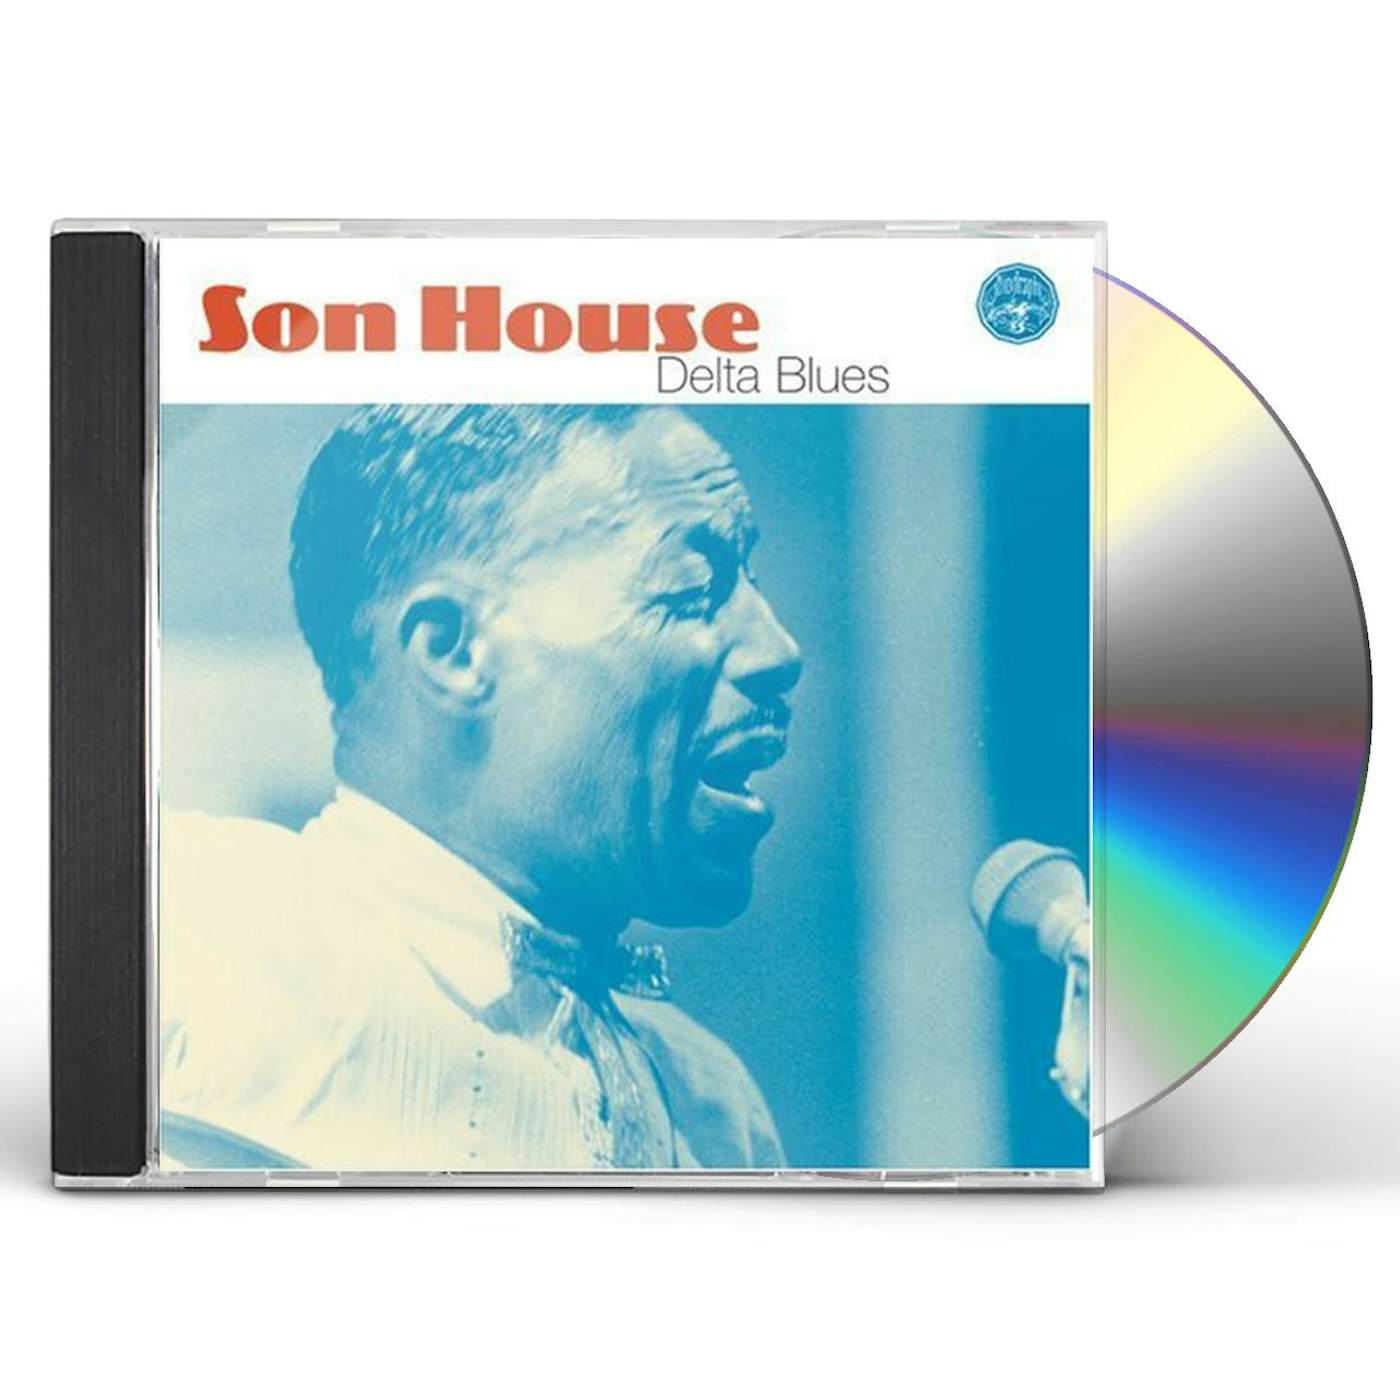 Son House DELTA BLUES CD